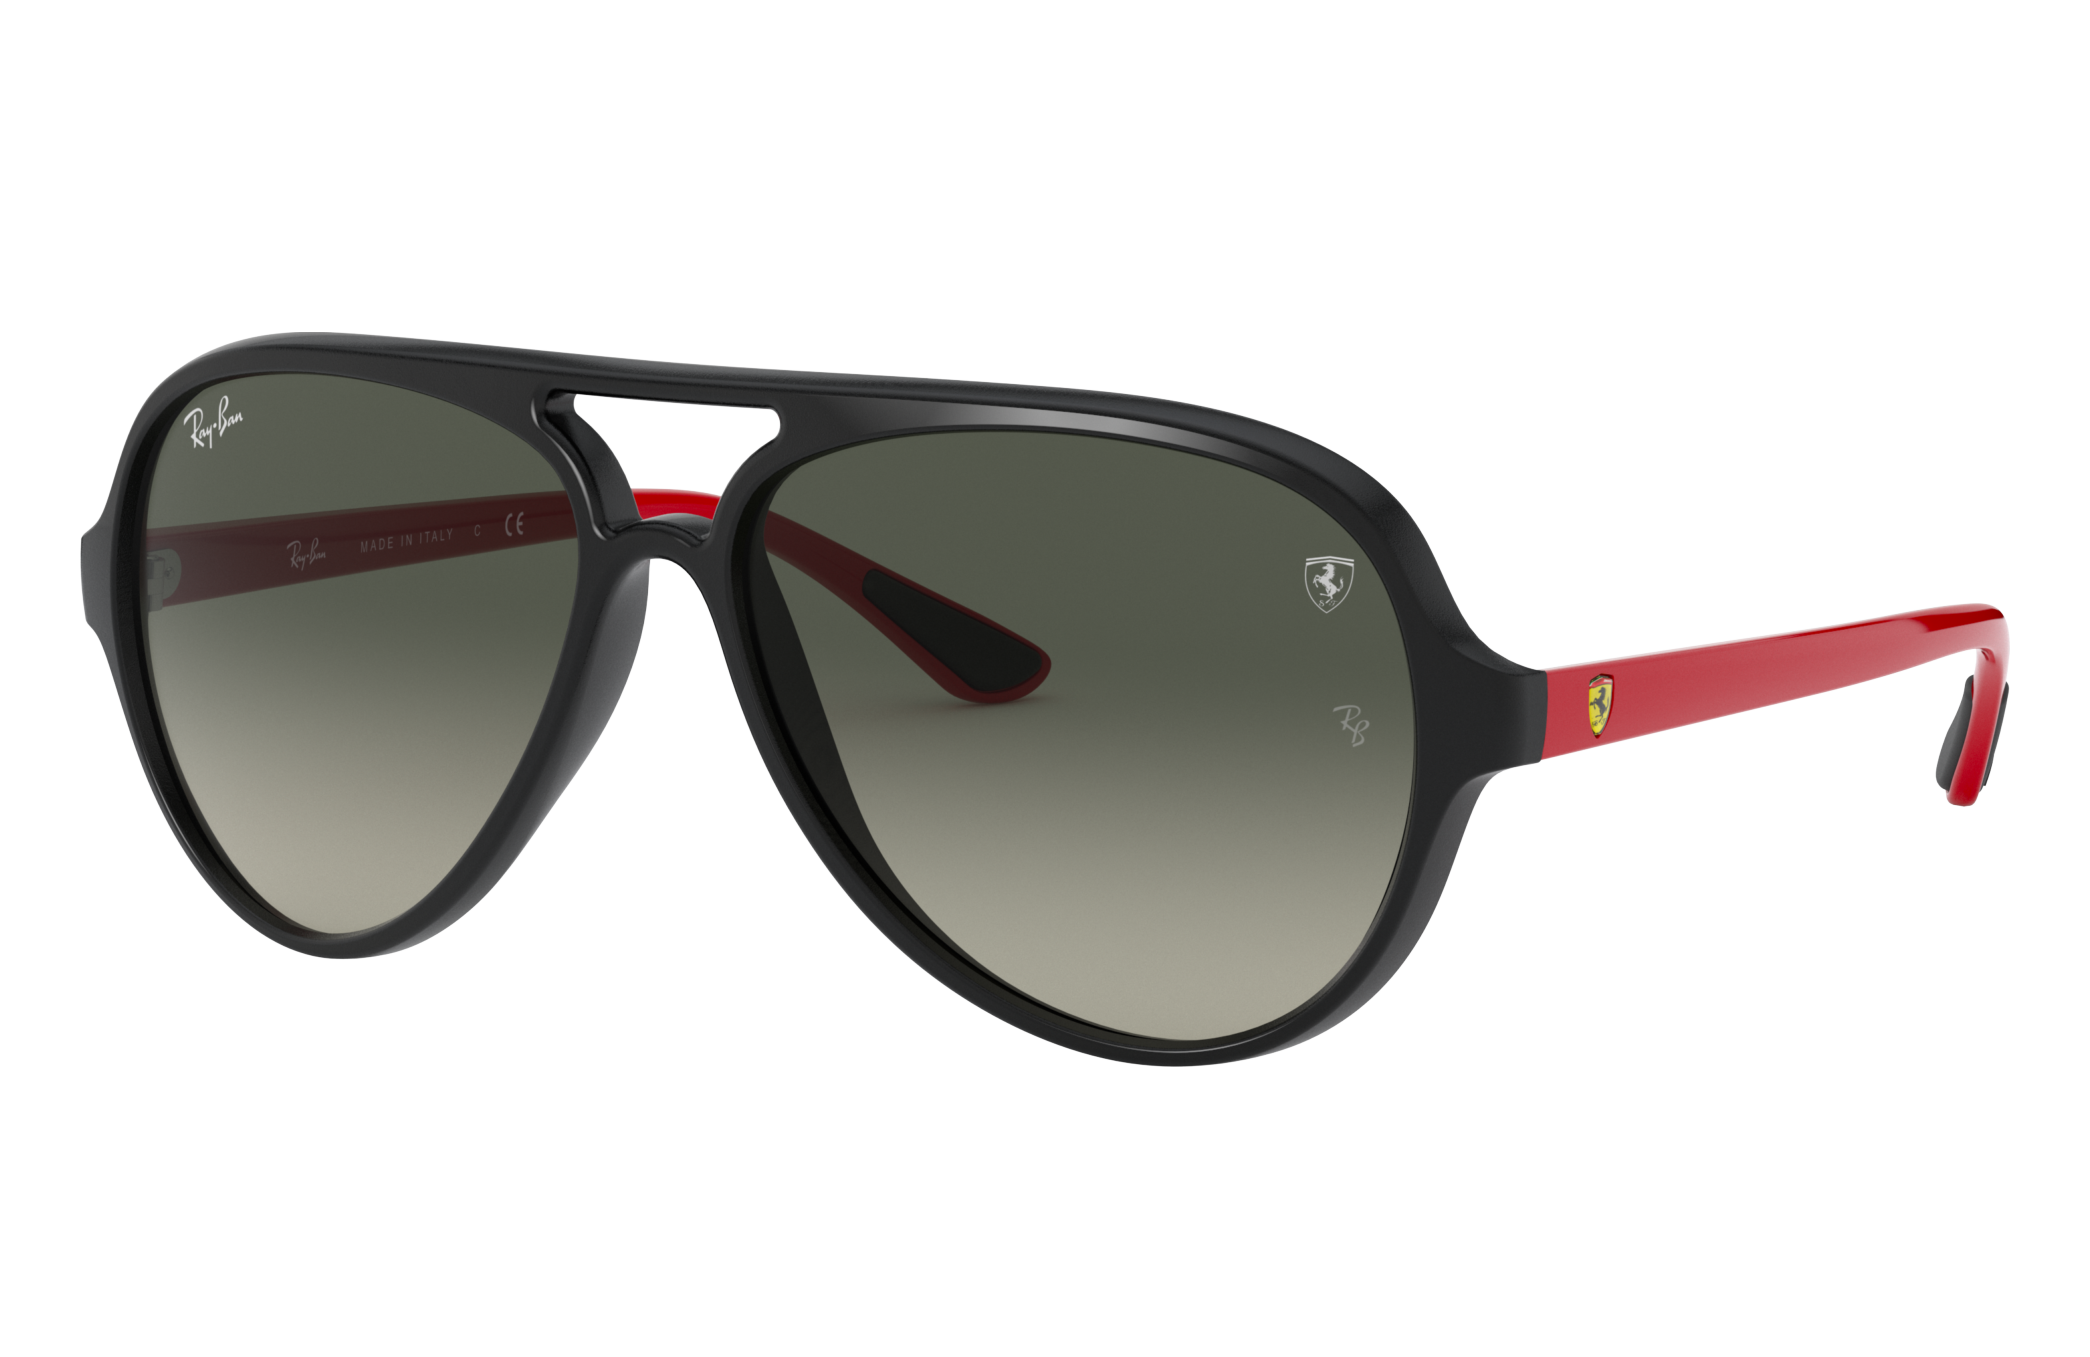 Rb4125m Scuderia Ferrari Collection Sunglasses in Black and Grey | Ray-Ban®